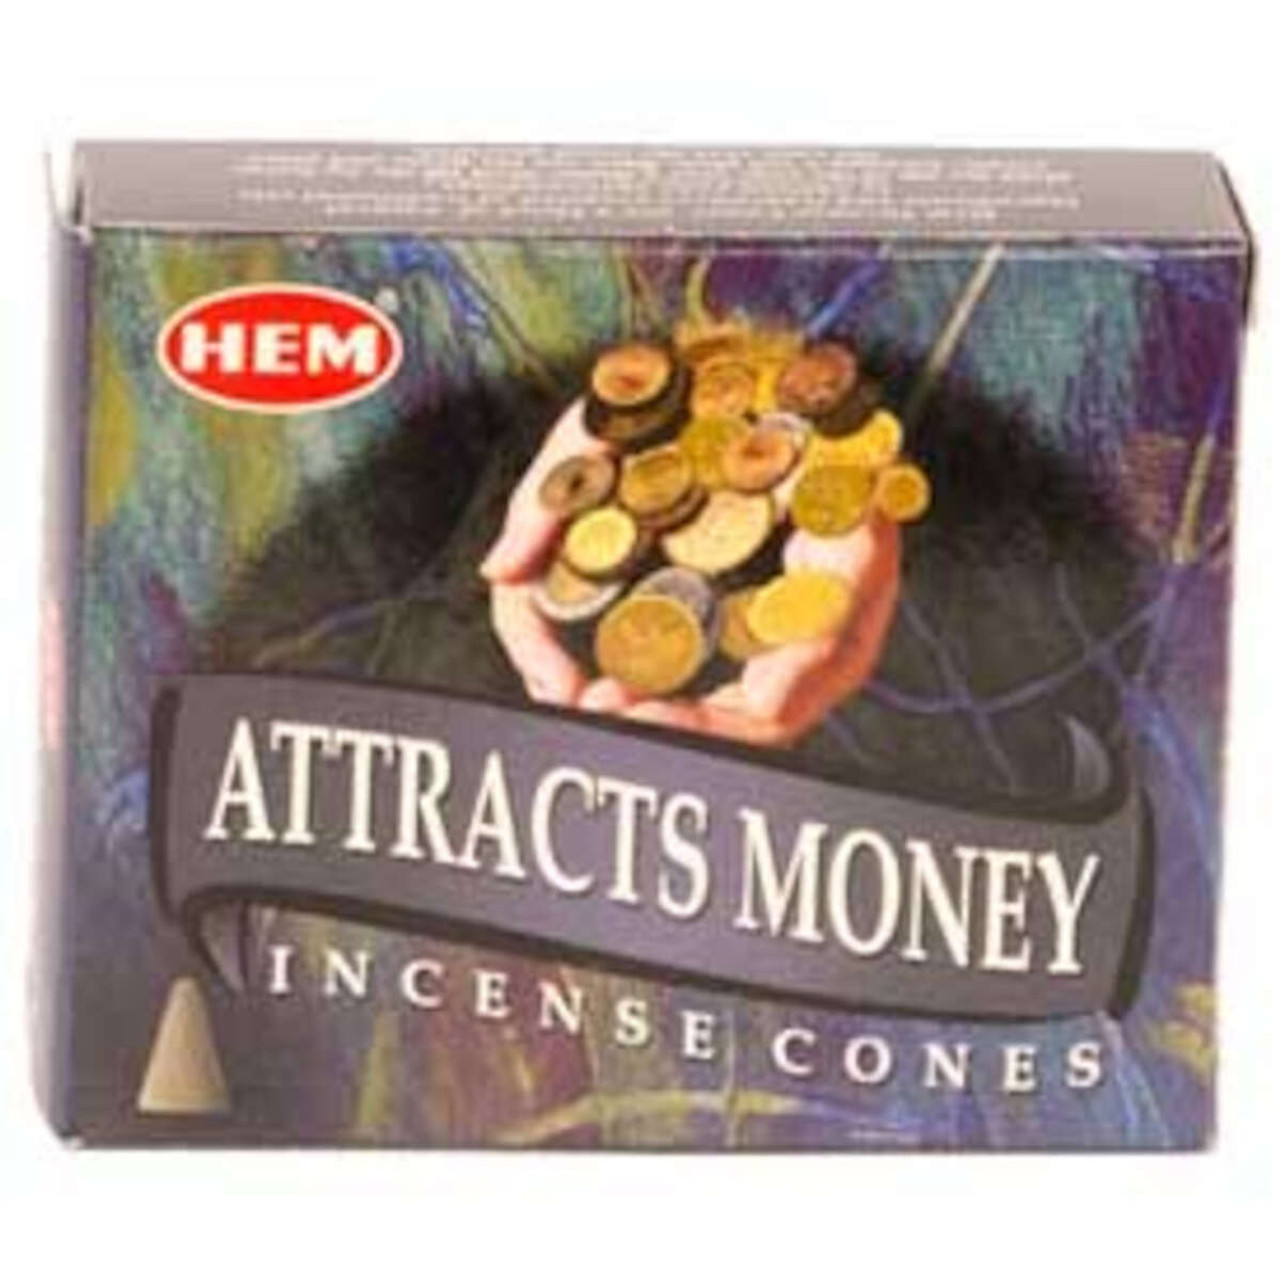 Attracts Money HEM Incense Cones 10 pack